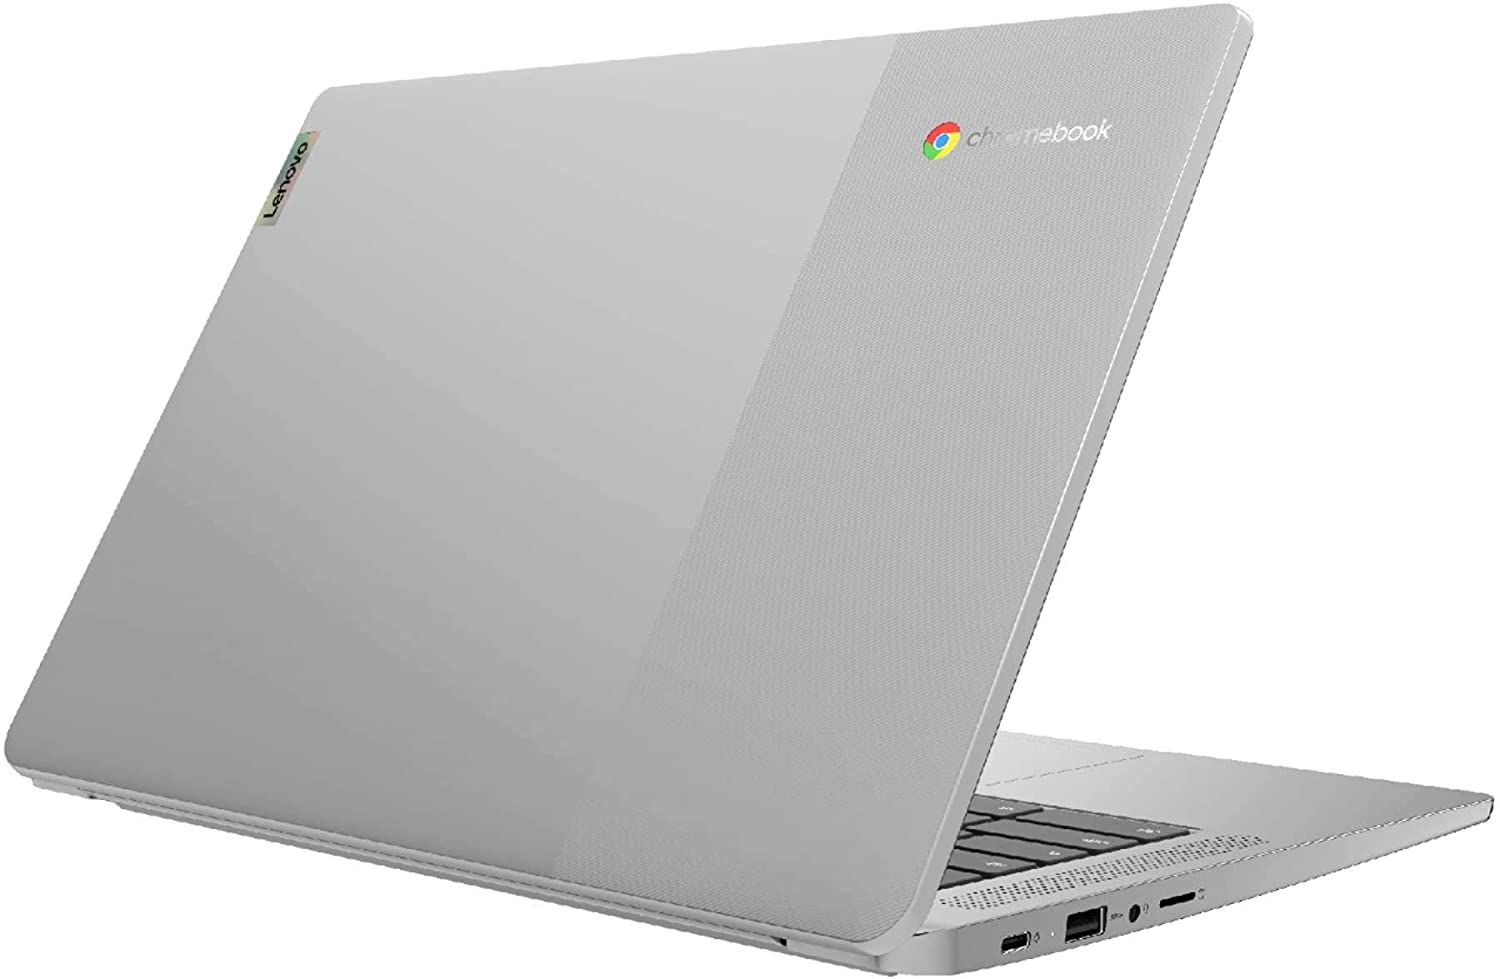 Lenovo Chromebook 3 Google Laptop